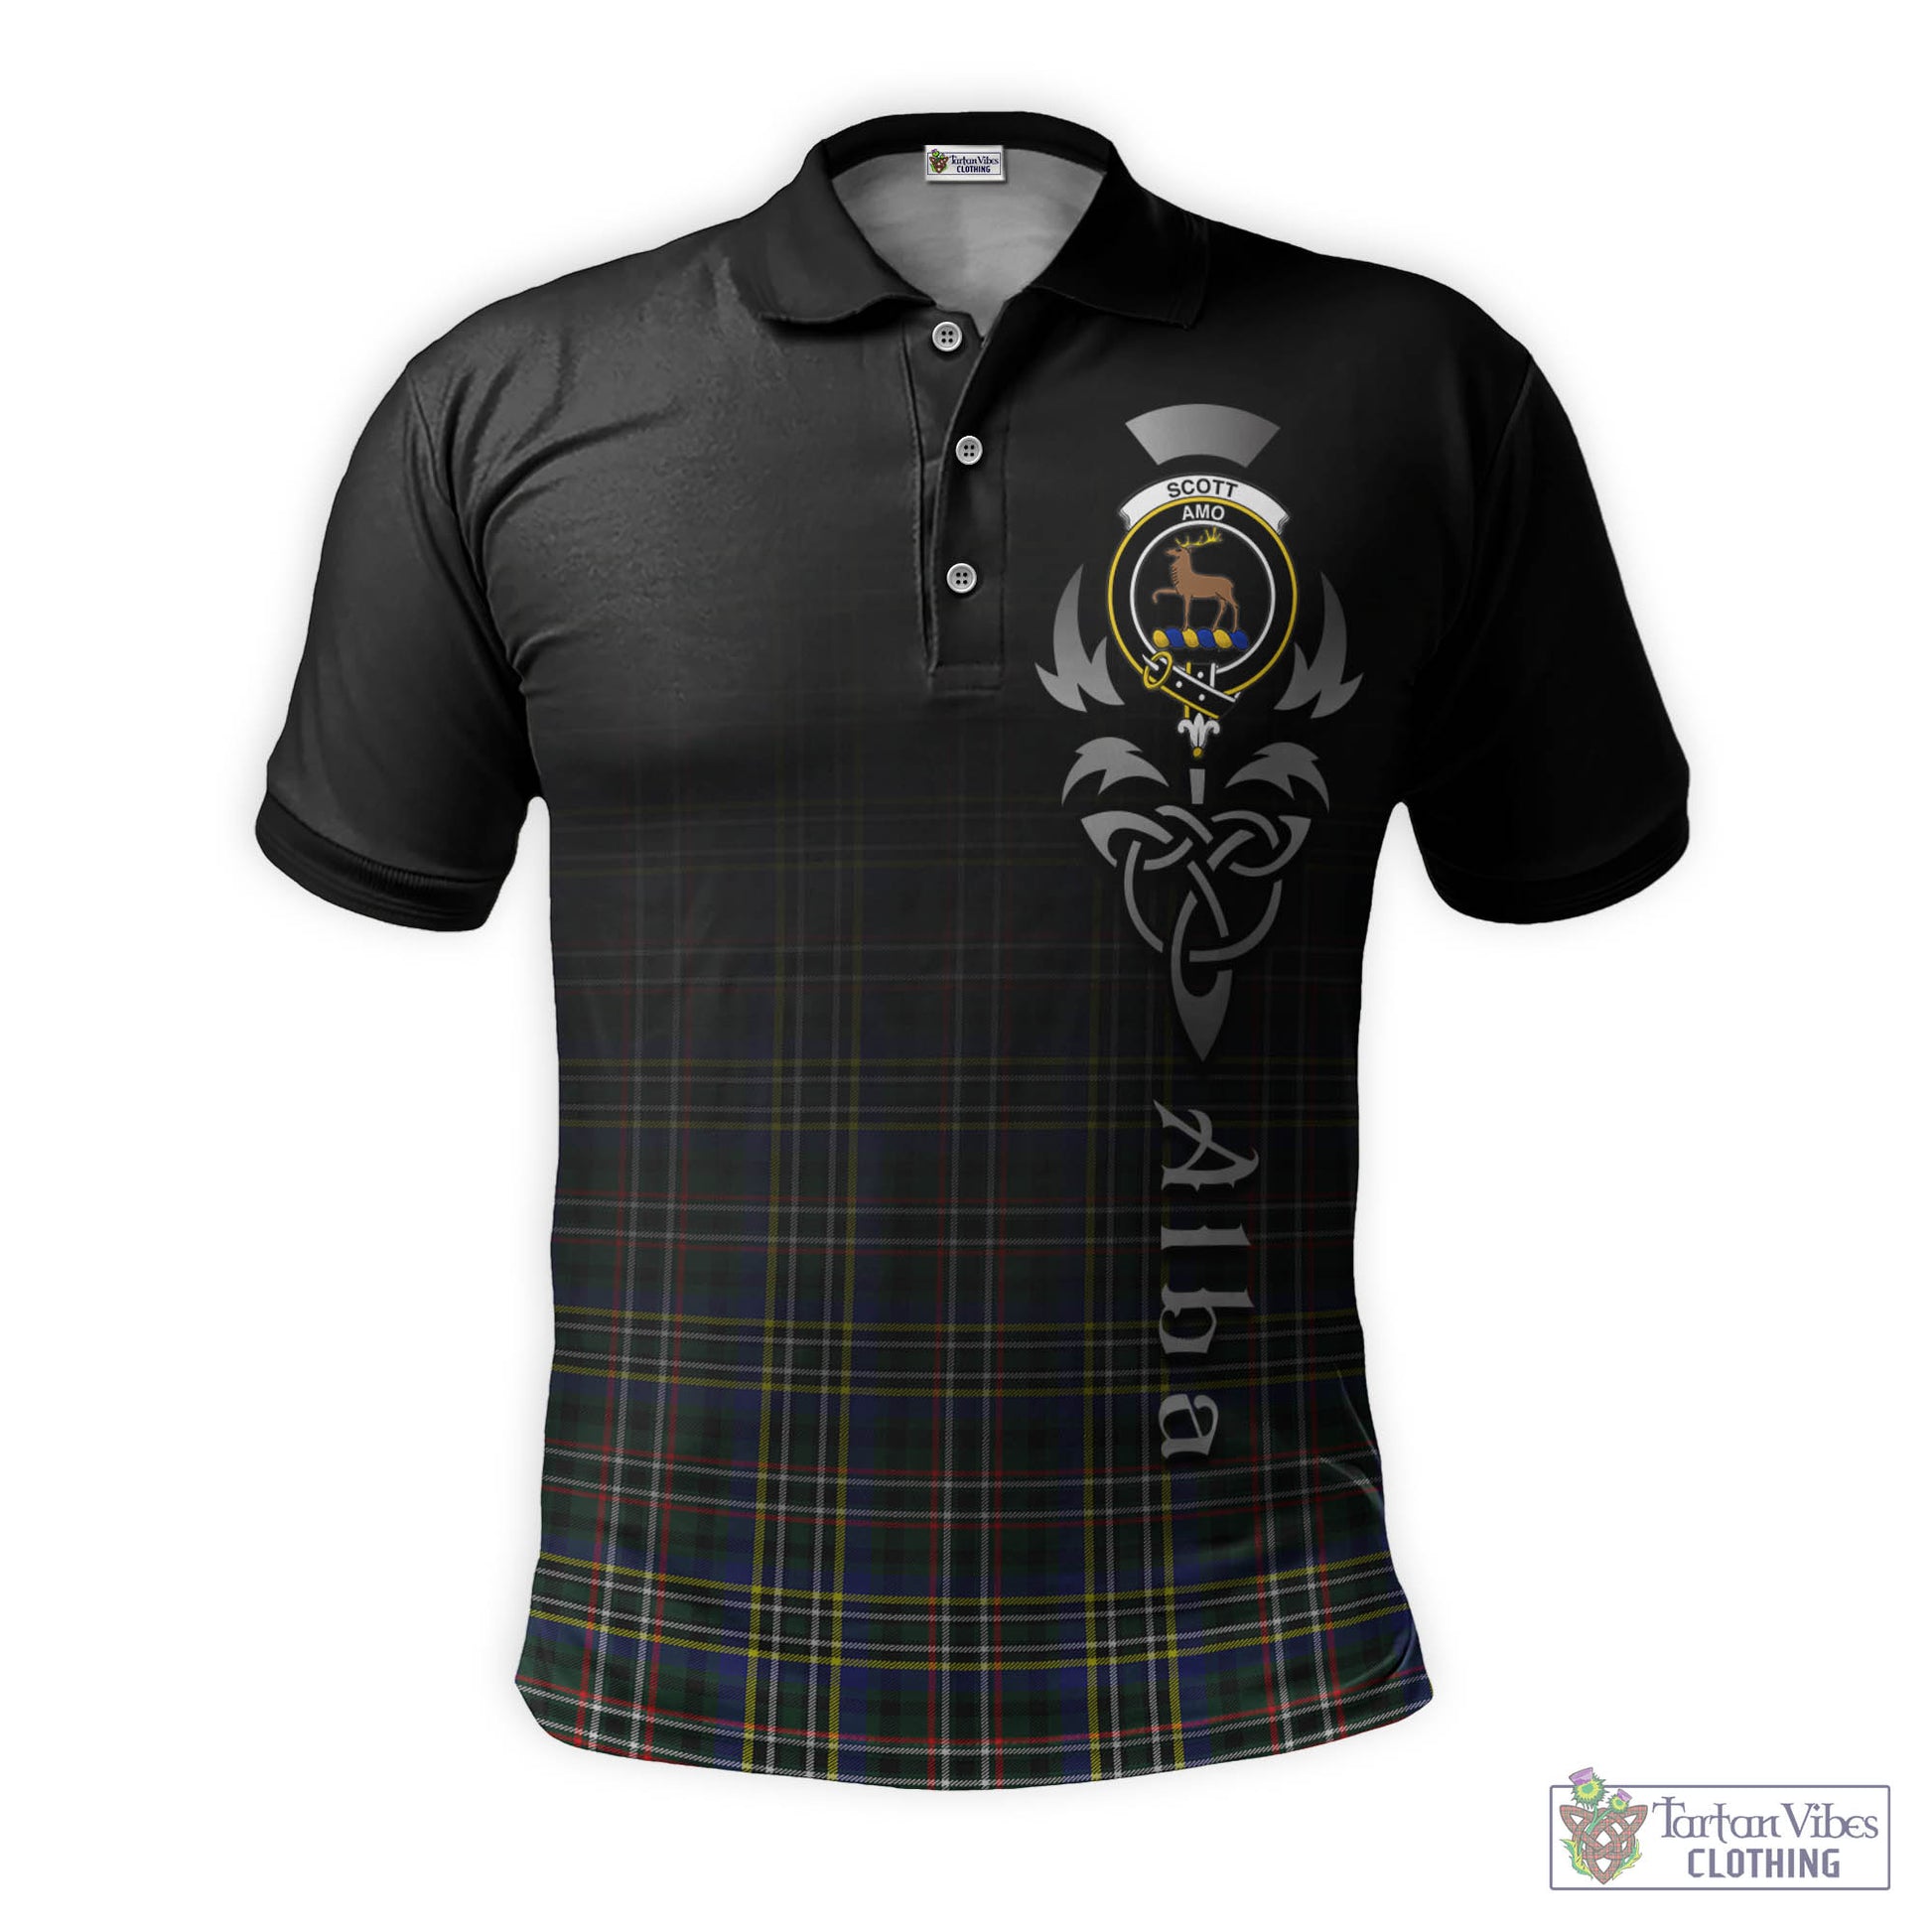 Tartan Vibes Clothing Scott Green Modern Tartan Polo Shirt Featuring Alba Gu Brath Family Crest Celtic Inspired